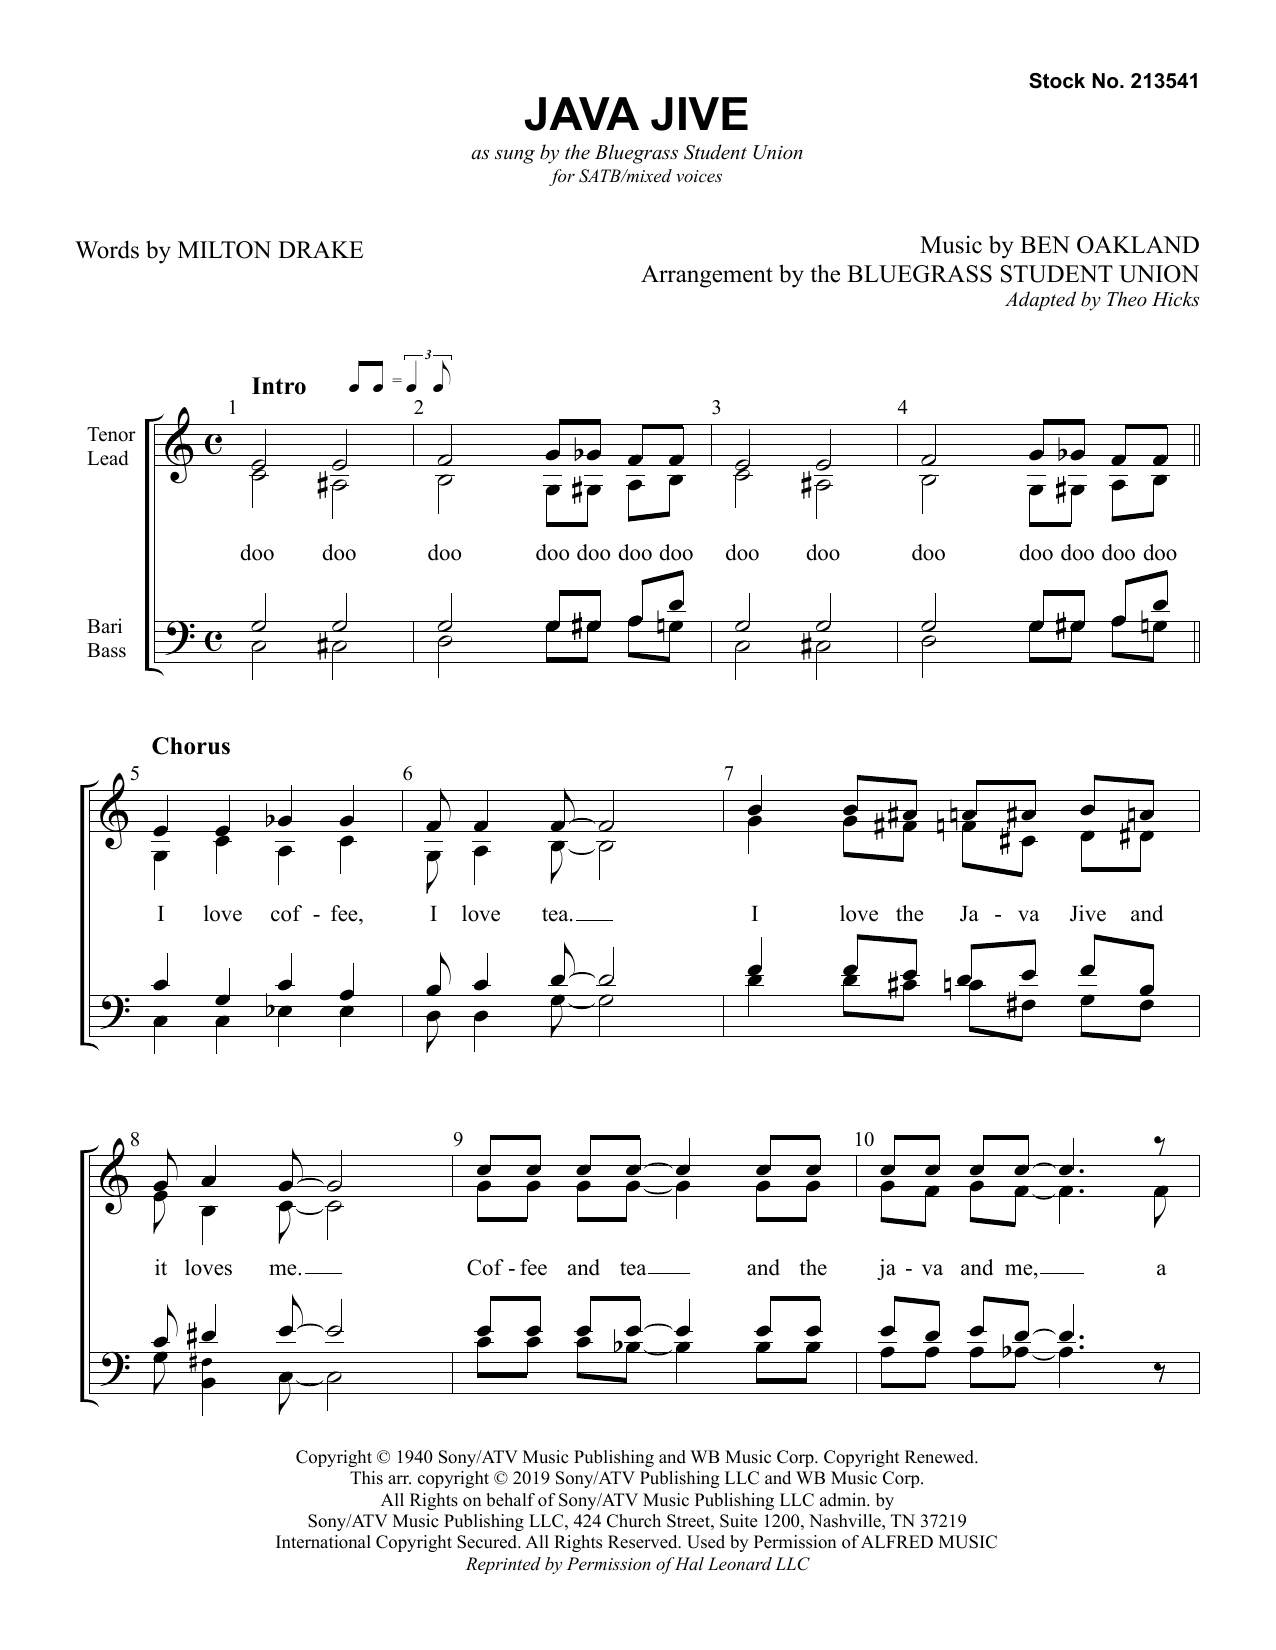 Milton Drake & Ben Oakland Java Jive (arr. Bluegrass Student Union) Sheet Music Notes & Chords for TTBB Choir - Download or Print PDF